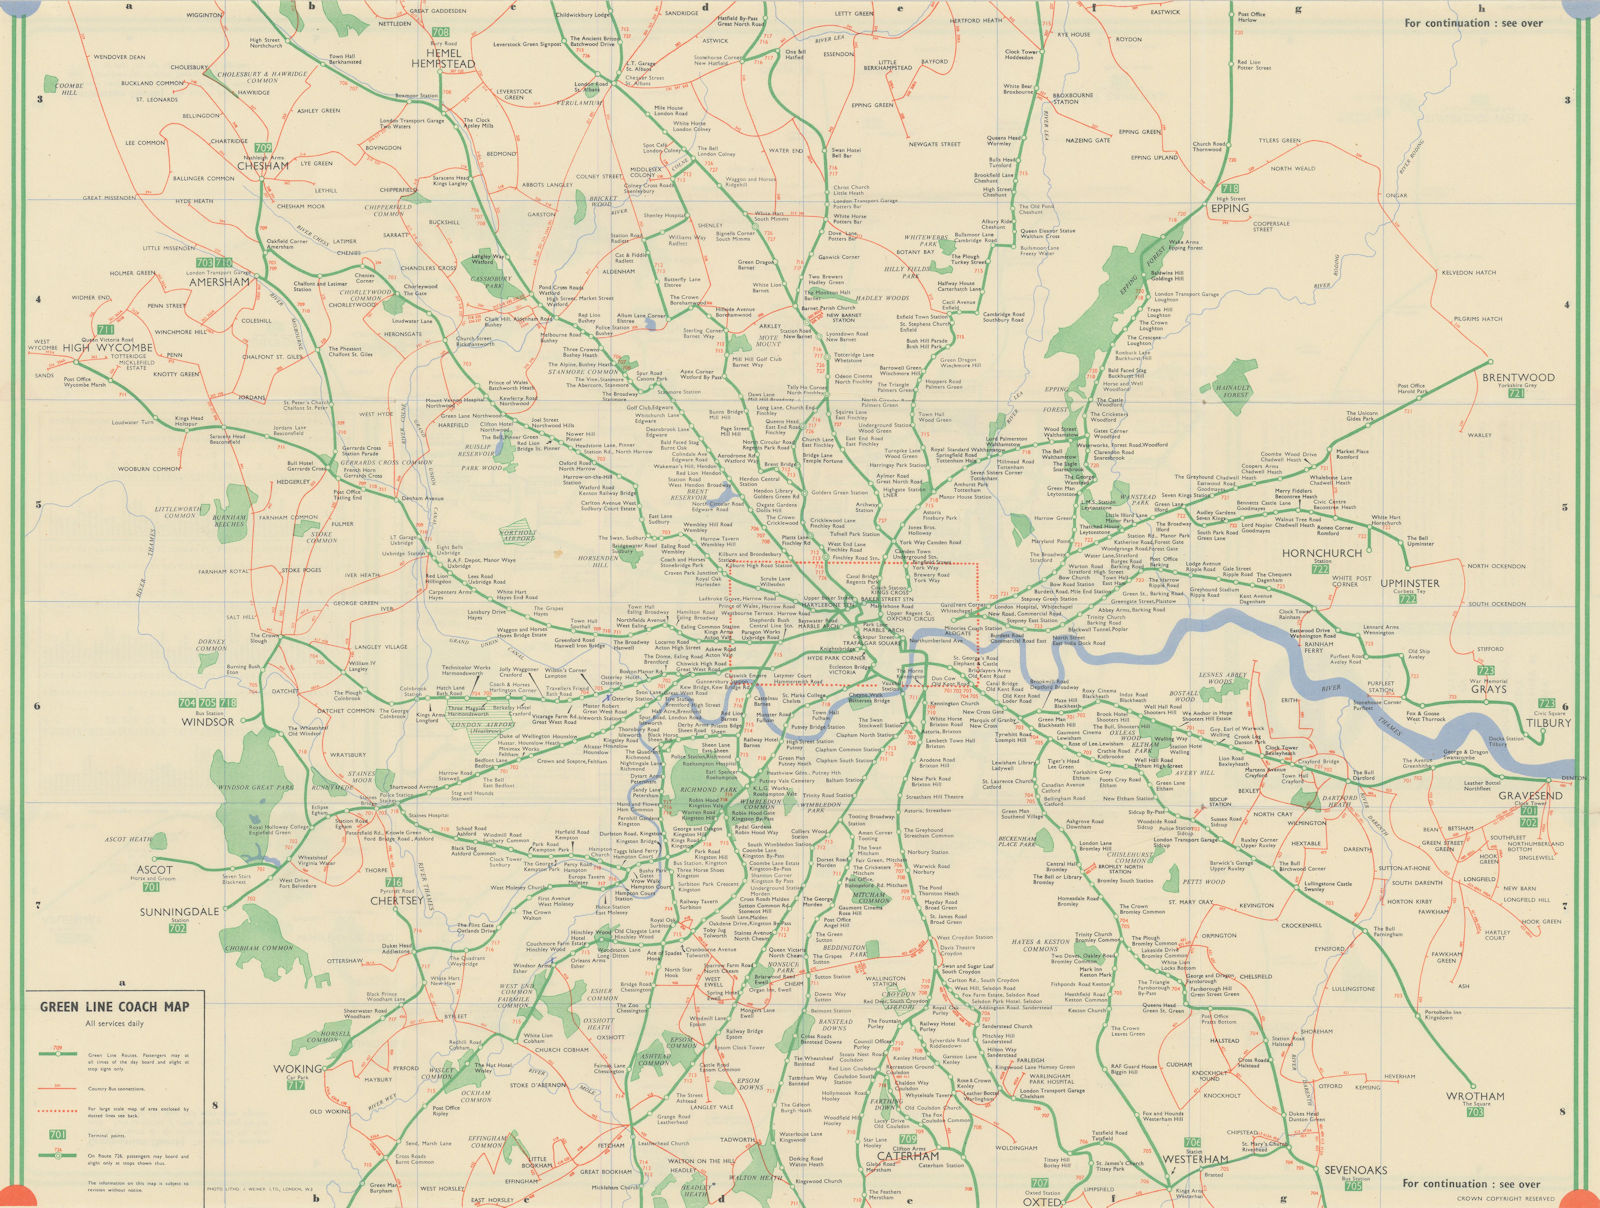 London Transport Green Line Coach map. #1 1948 old vintage plan chart